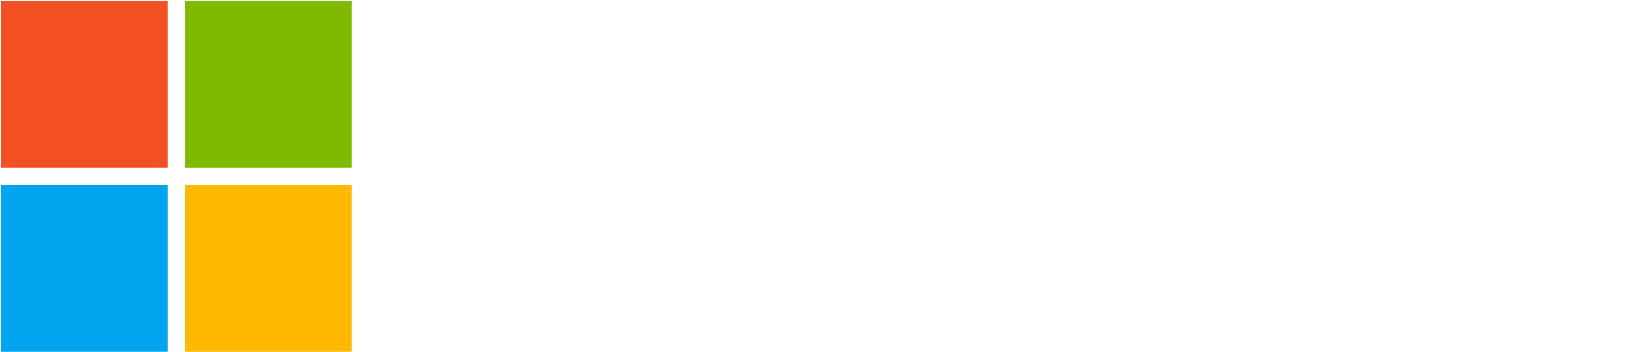 microsoft logo white